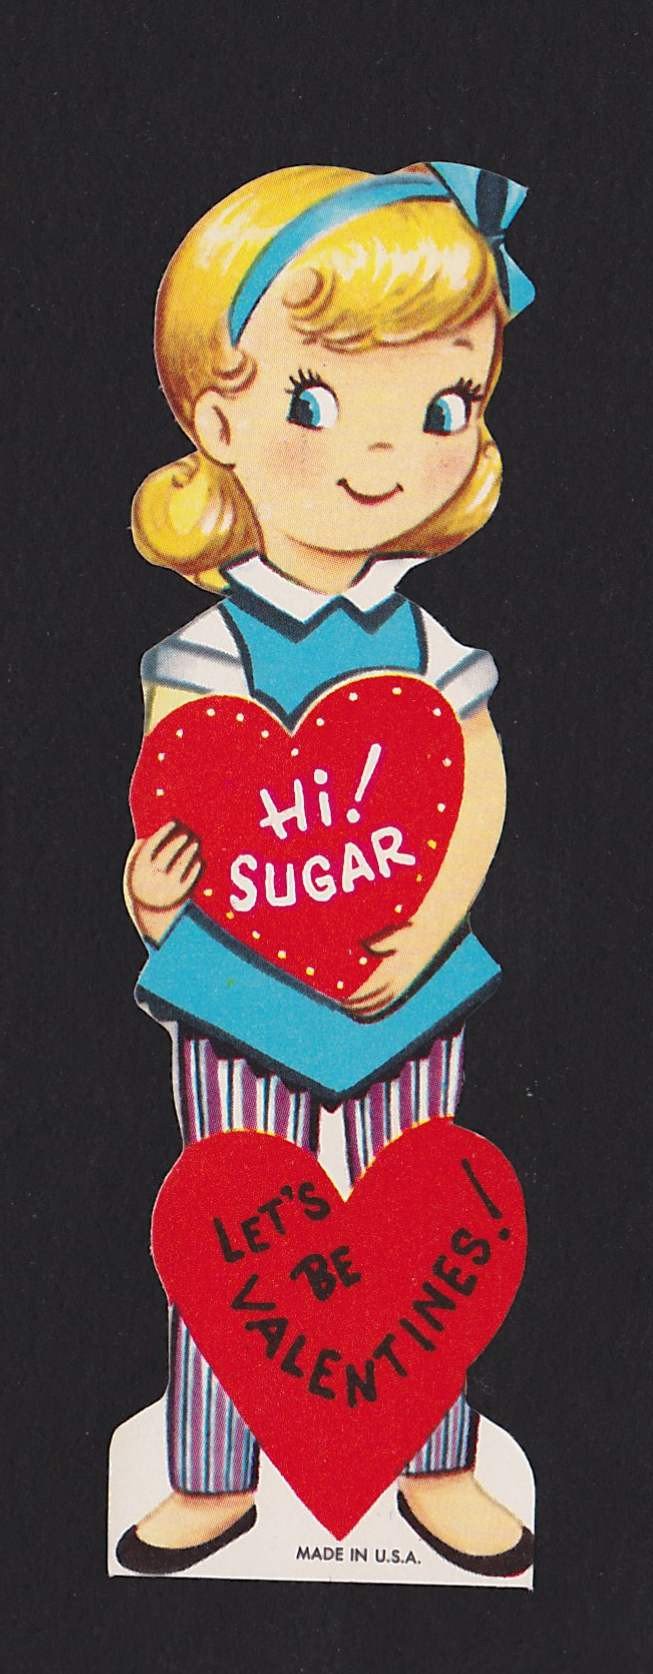 Hi Sugar! Let's Be Valentines Cute '50s Girl Vintage Valentine's Day Greeting Card